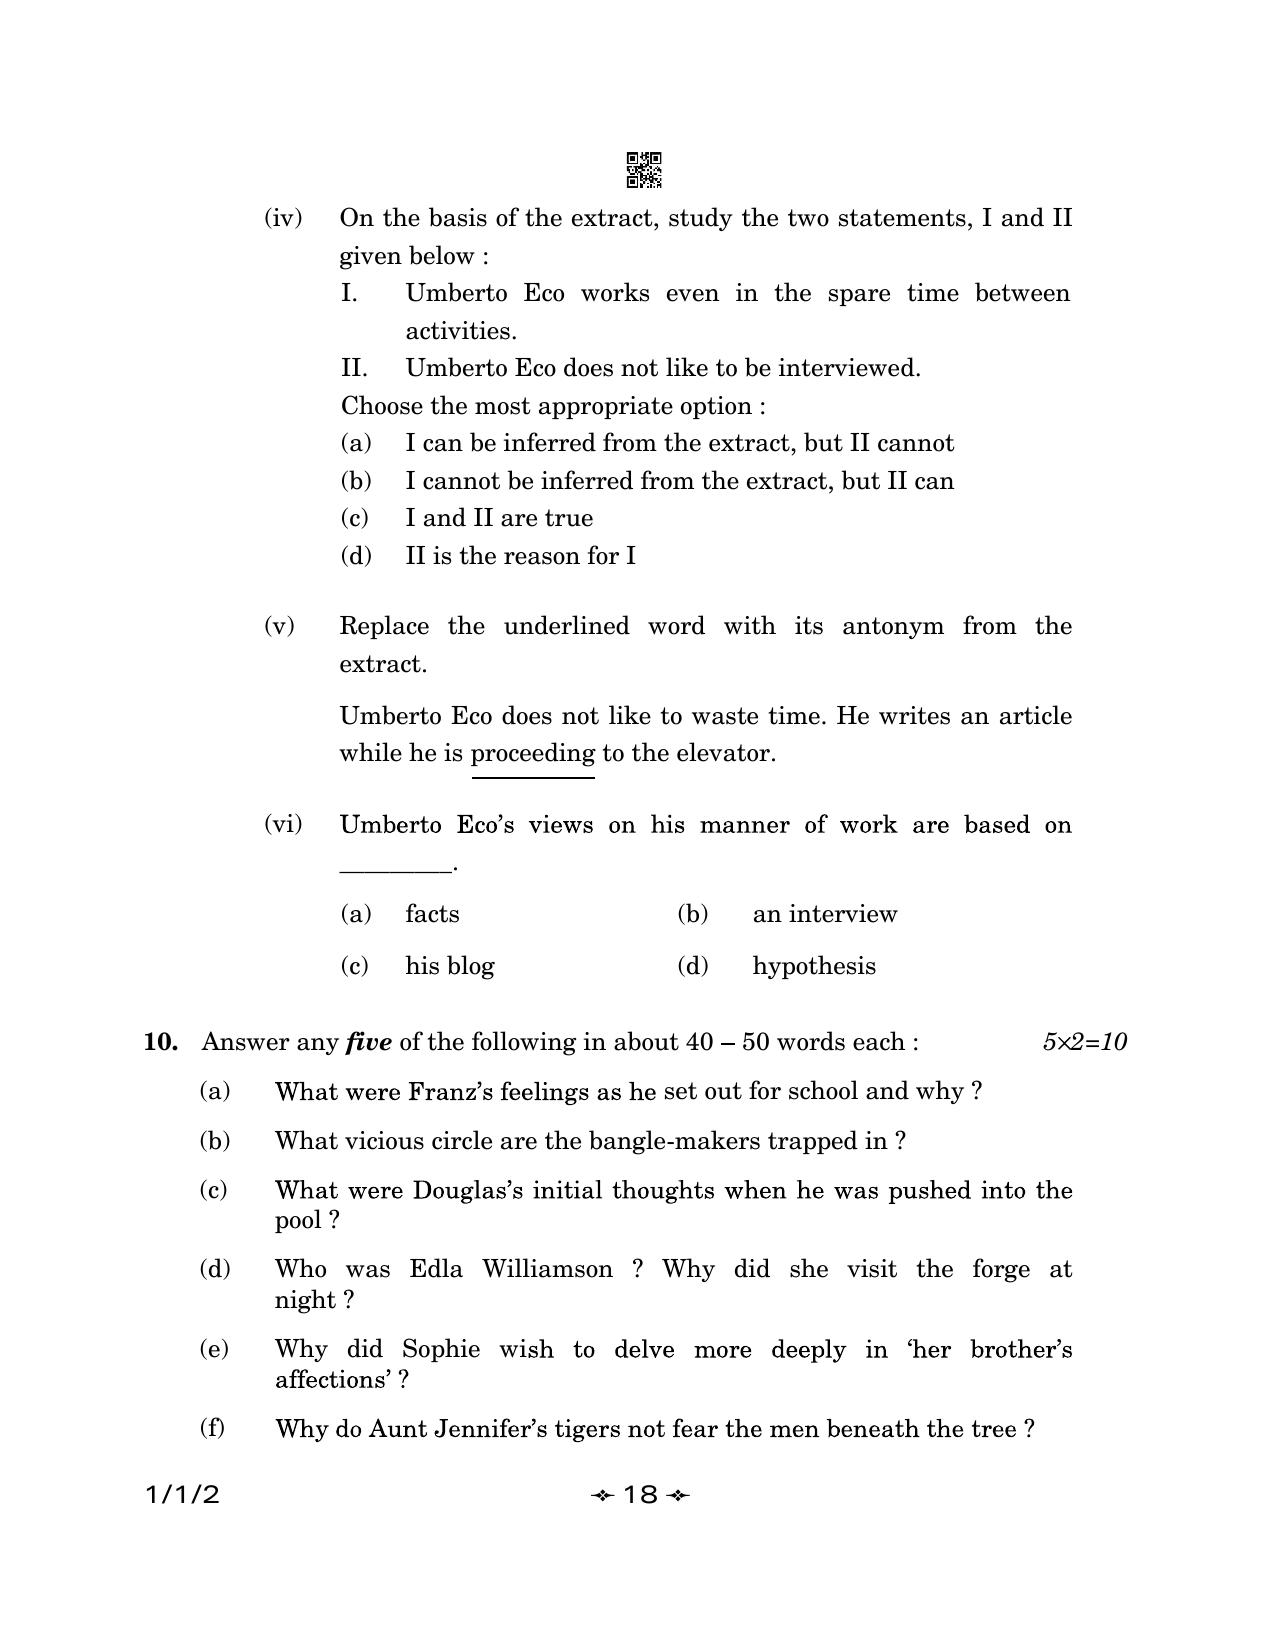 CBSE Class 12 1-1-2 English Core 2023 Question Paper - Page 18